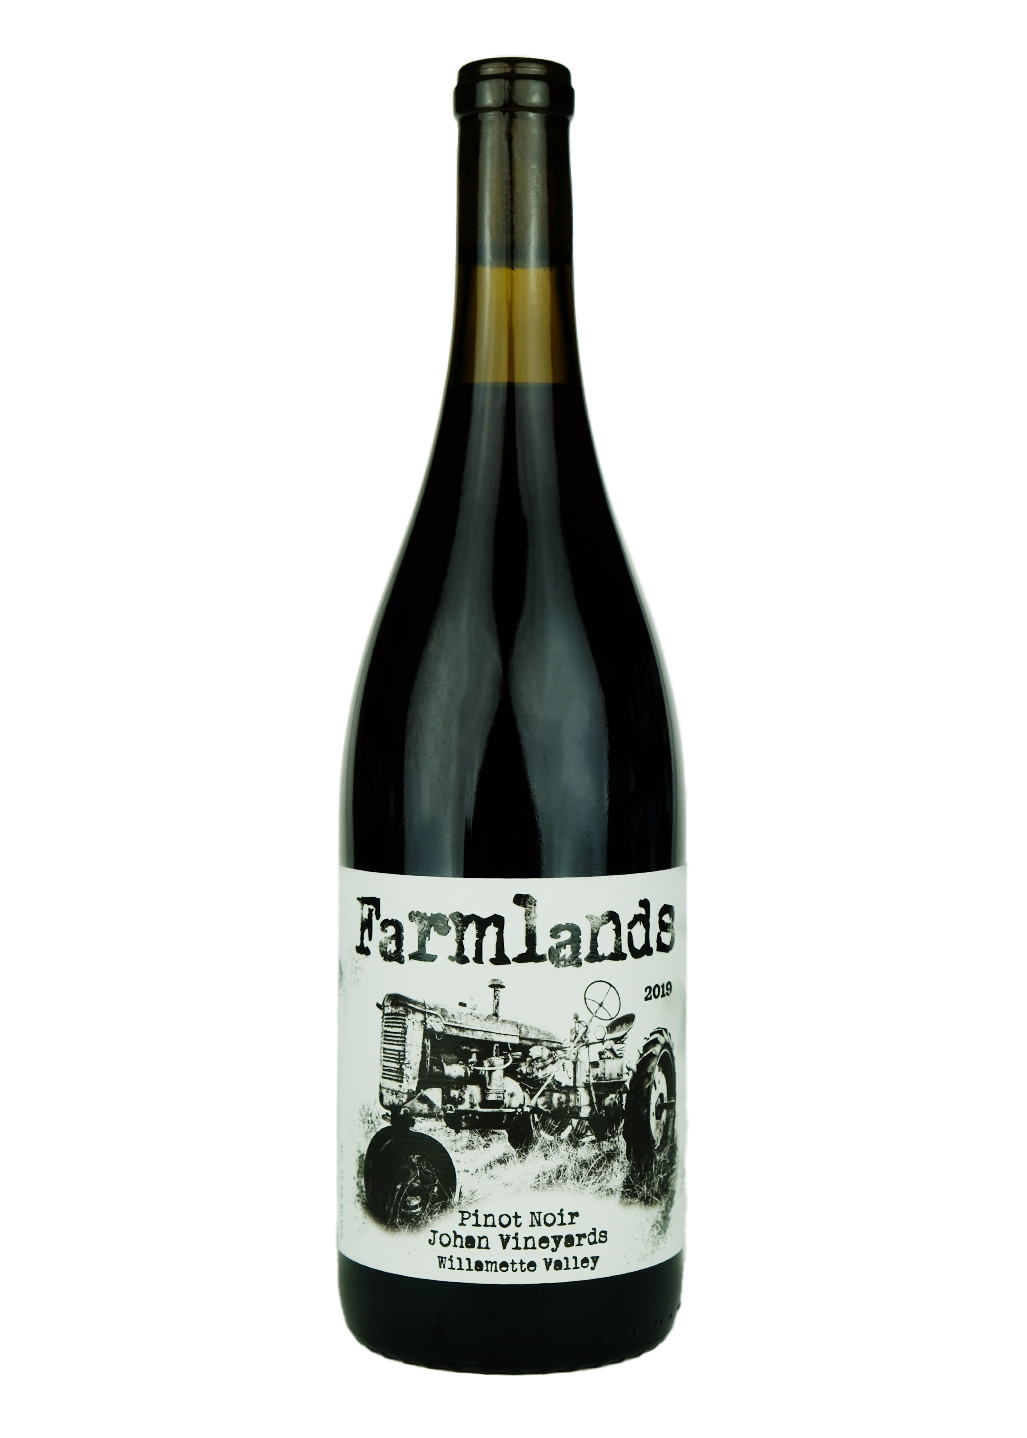 Johan Vineyards 2019 Pinot Noir 'Farmlands'